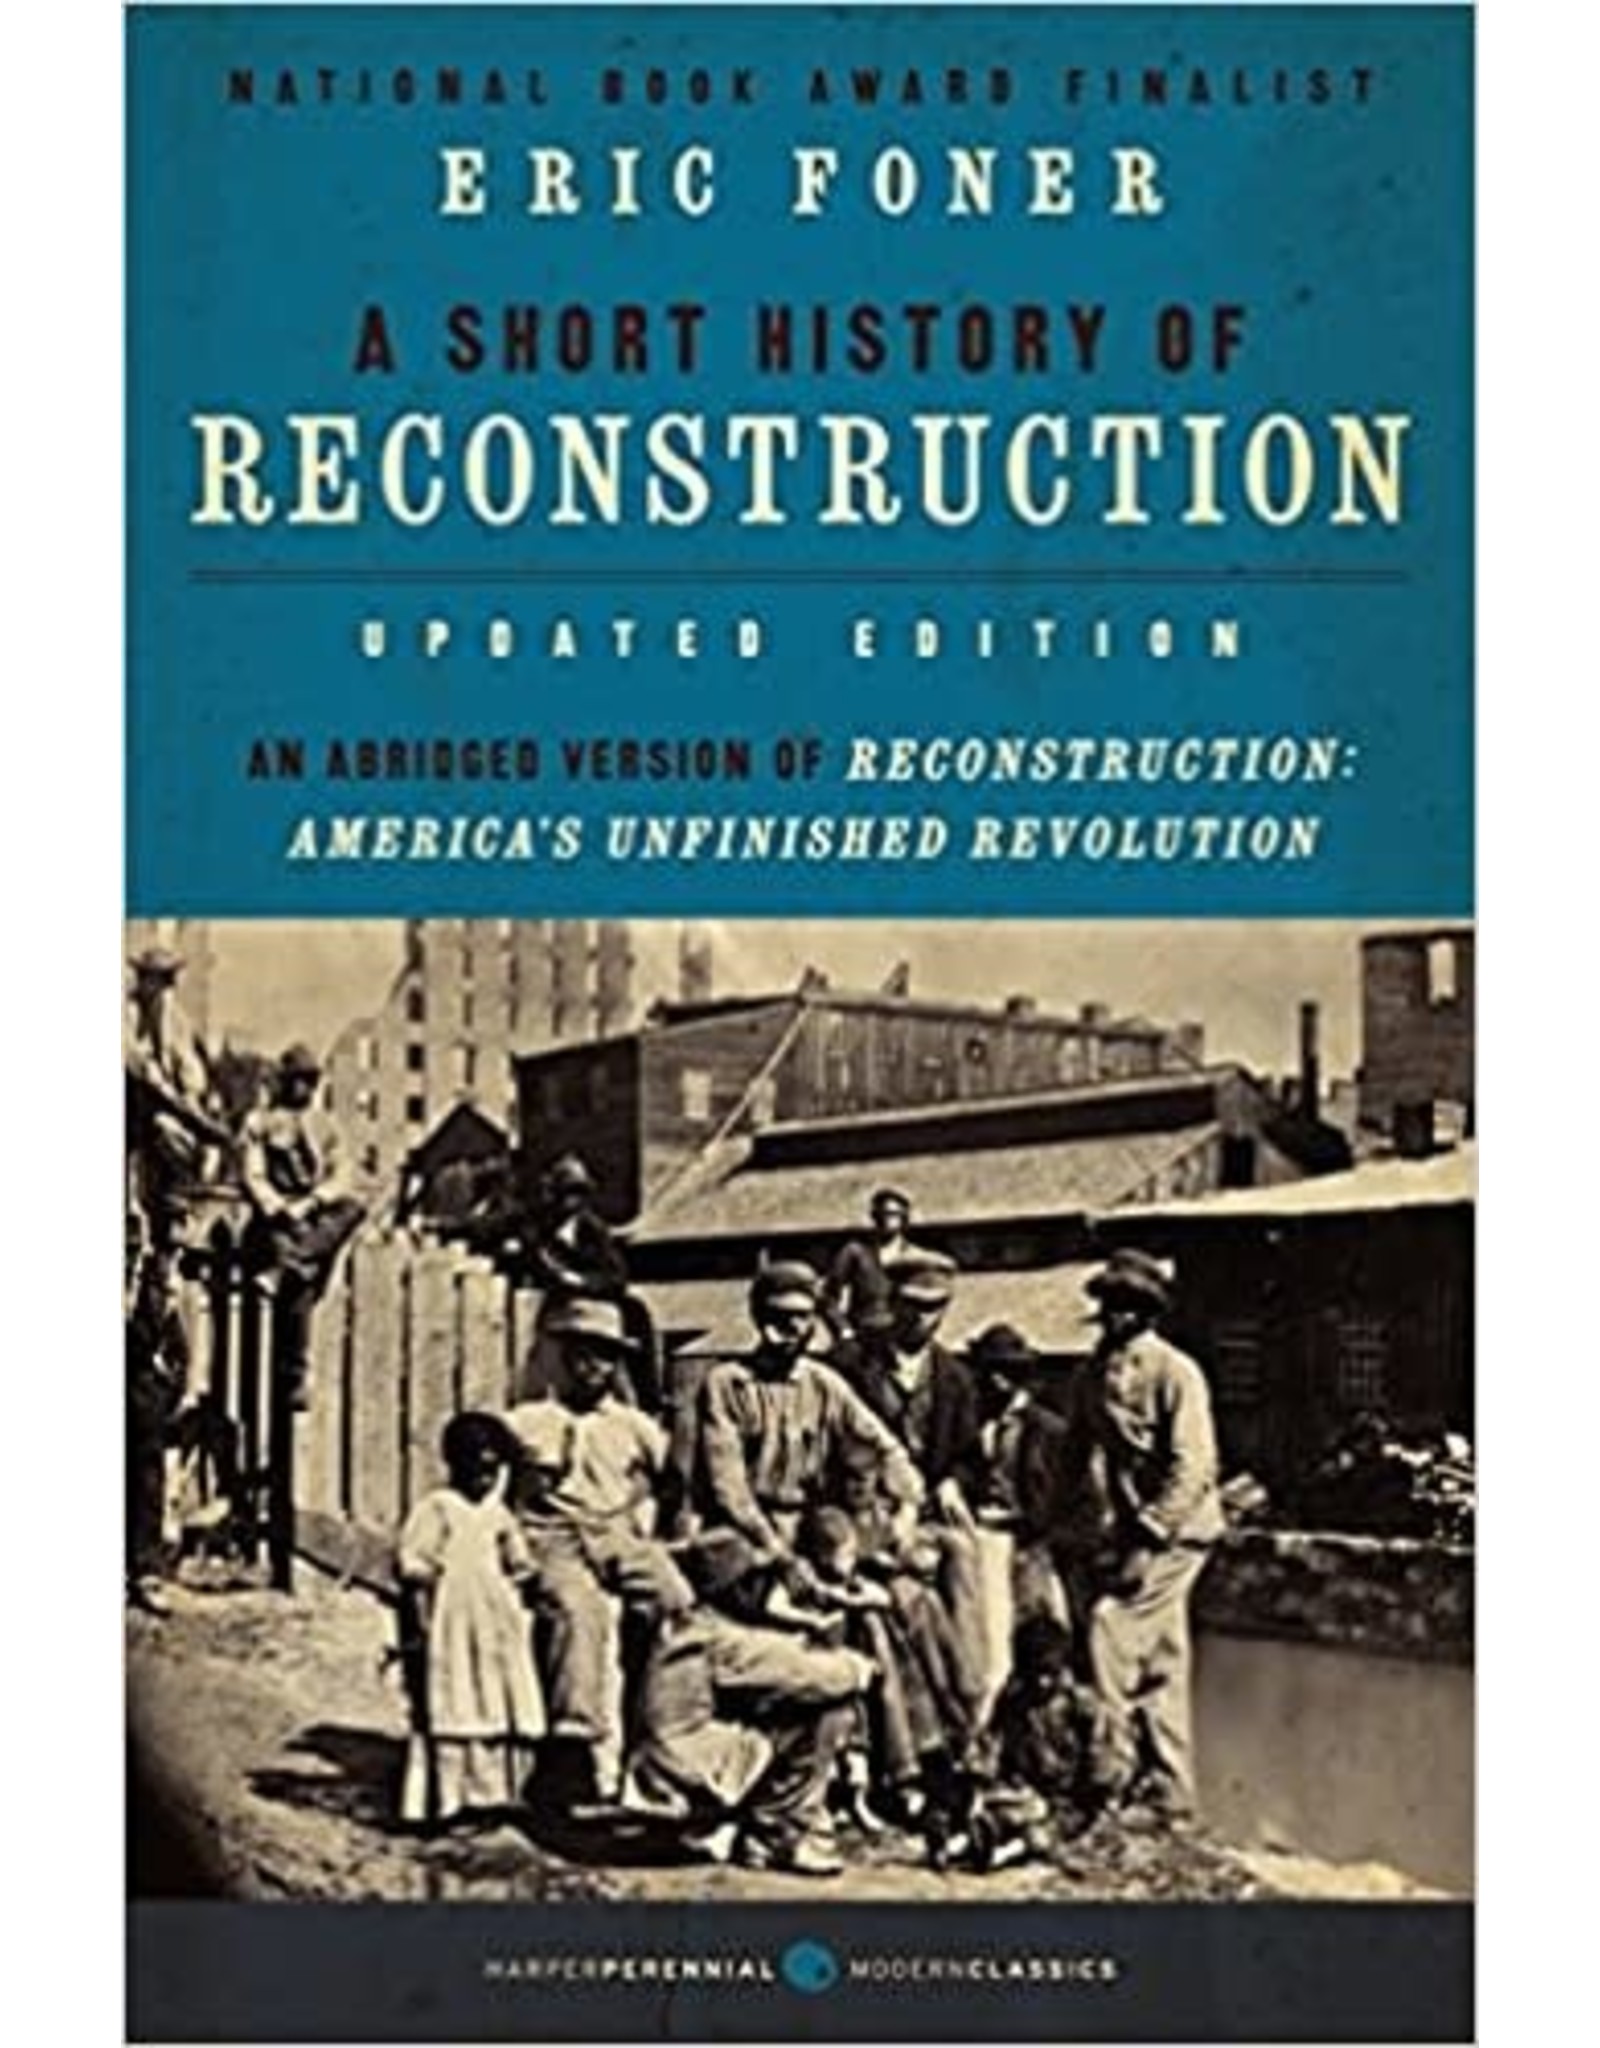 Non-Fiction: Civil War & Reconstruction A Short History of Reconstruction